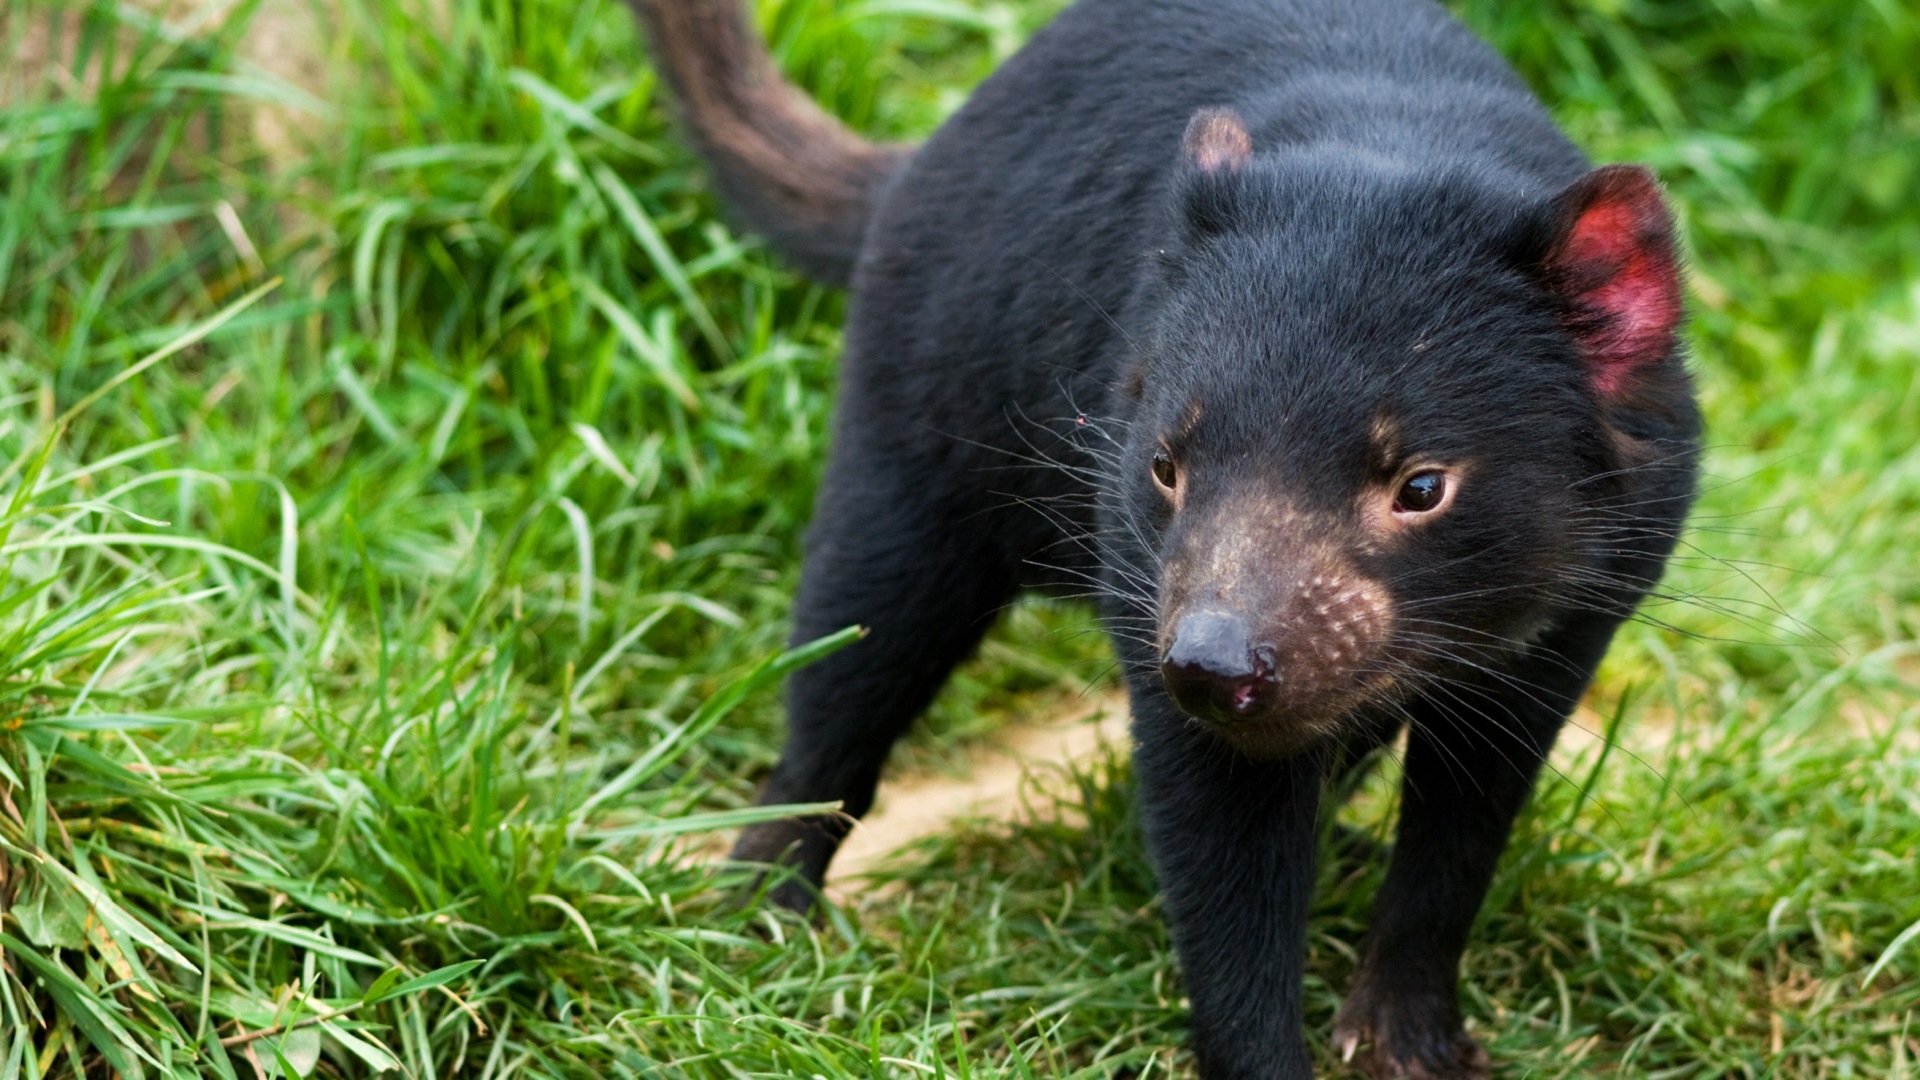 Tasmanian devil cancer won't lead extinction